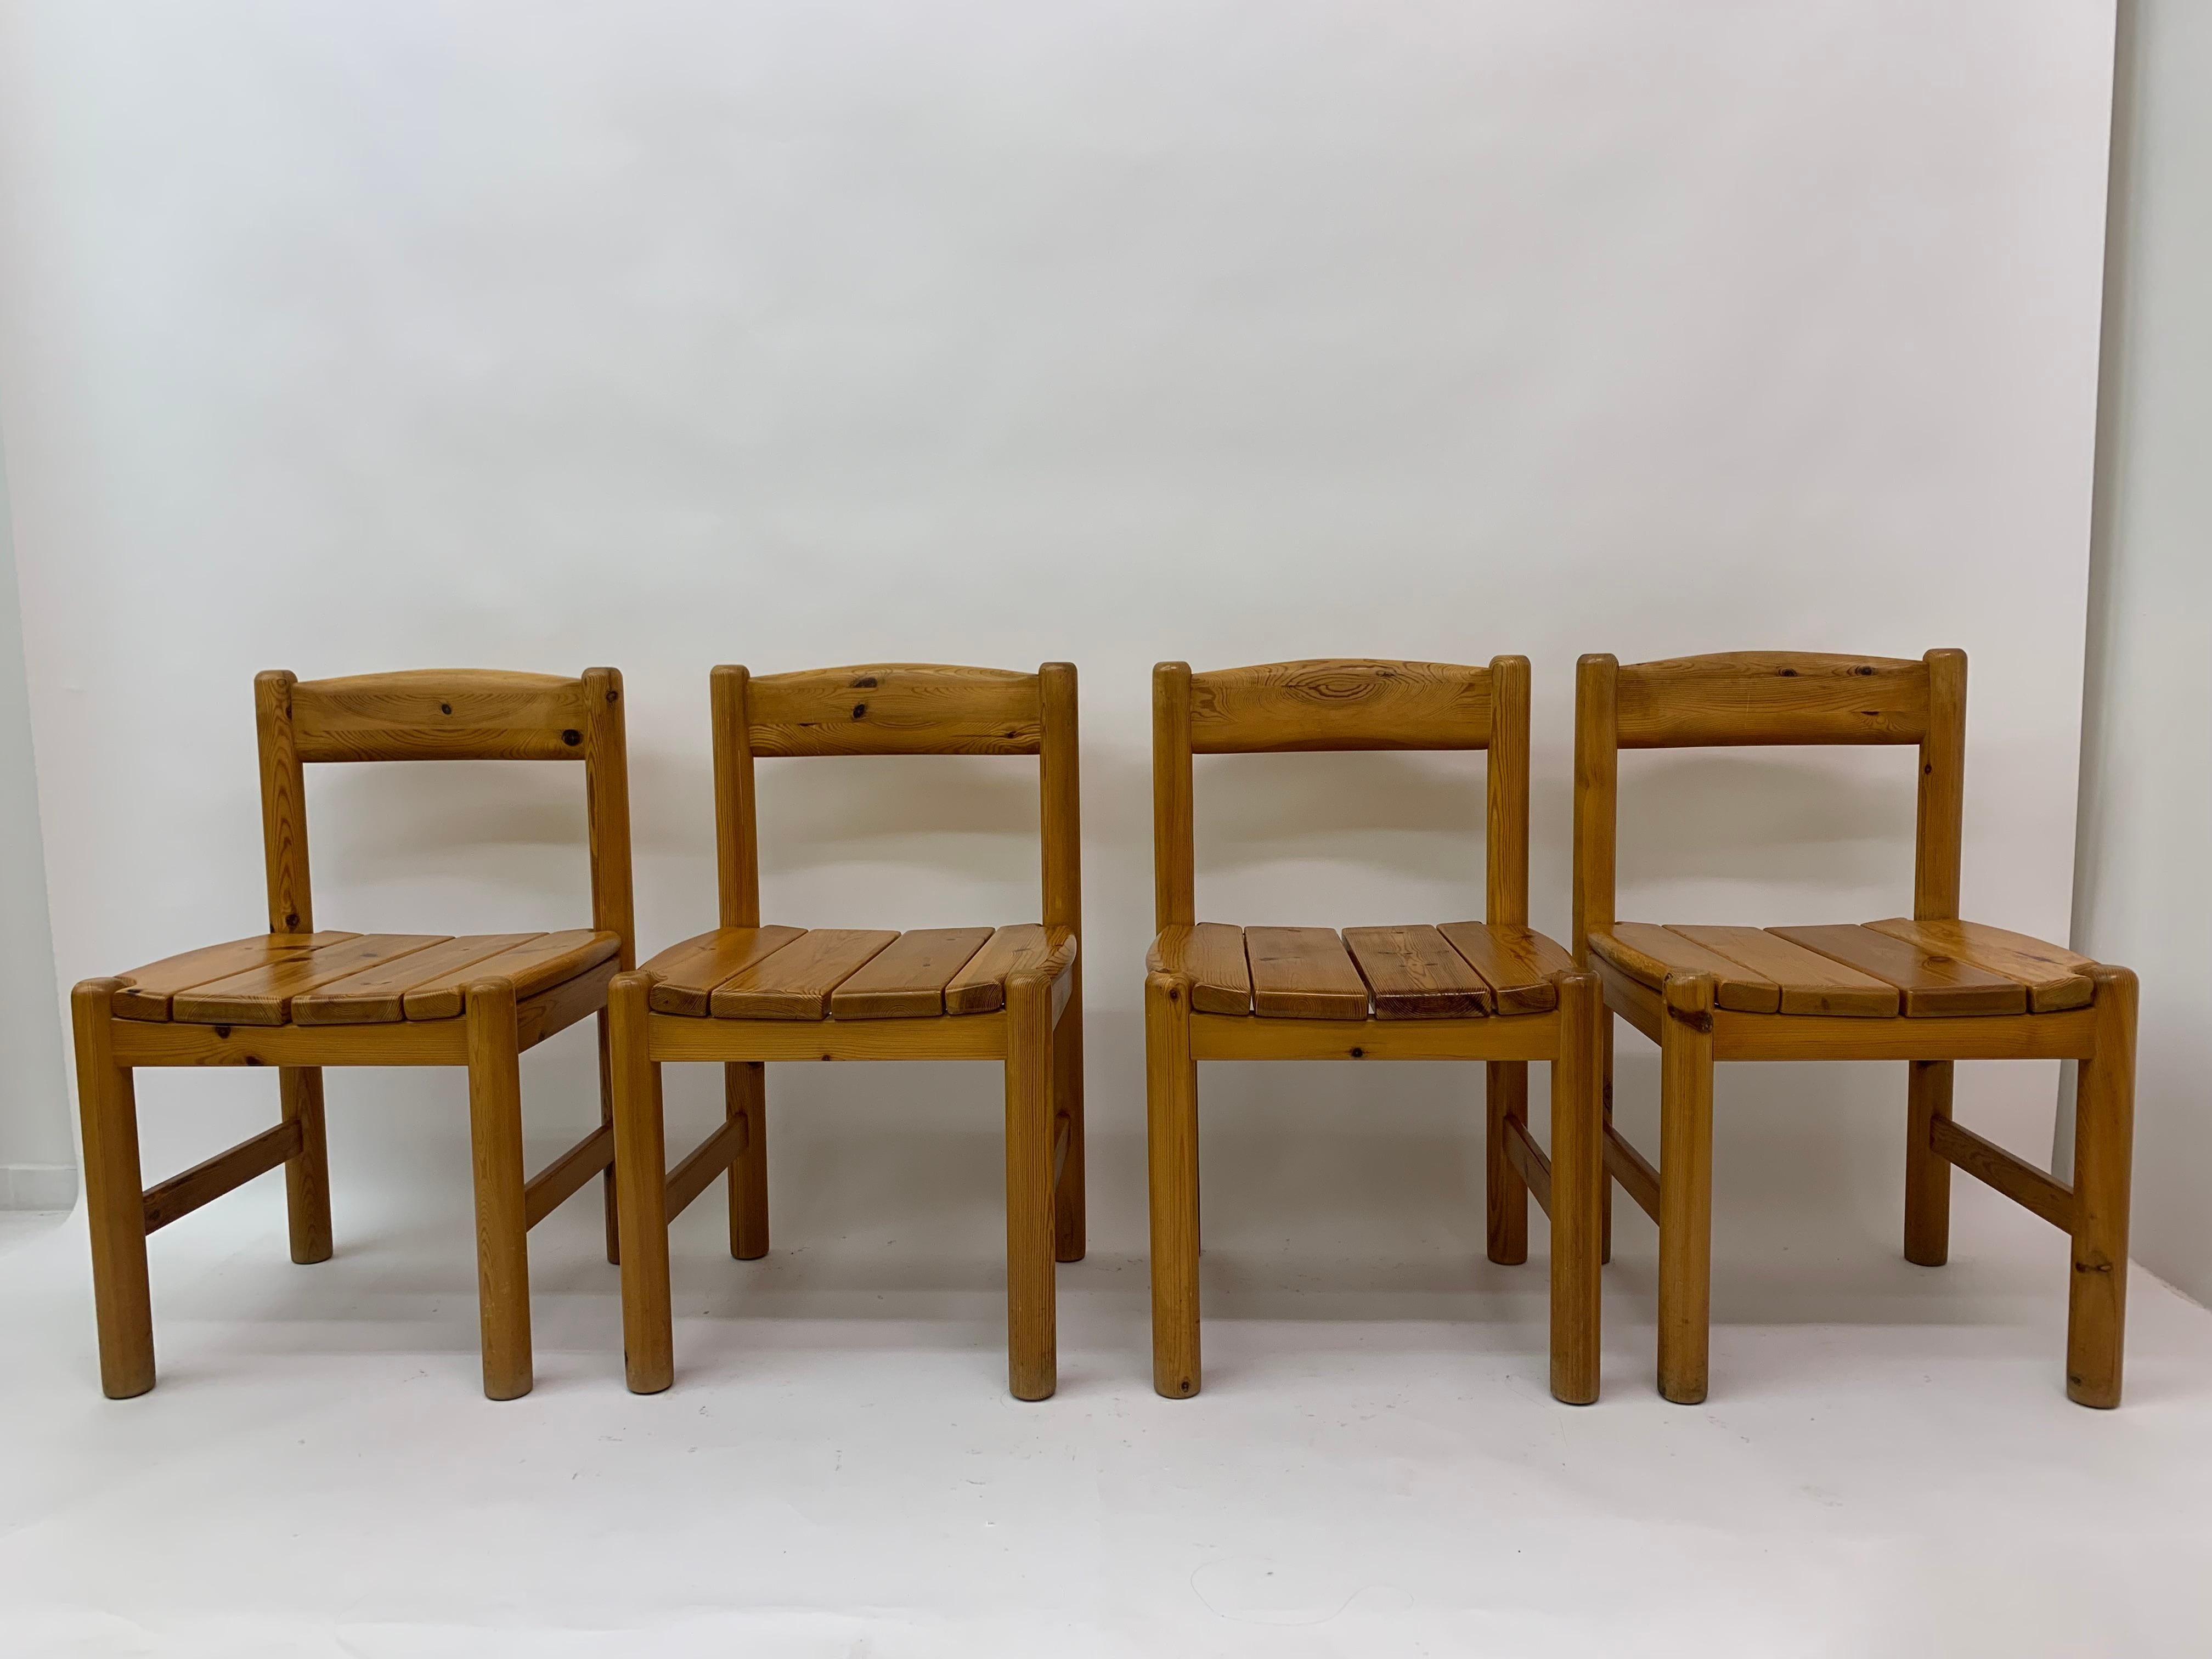 Set of 4 Rainer Daumiller dining chairs, 1970’s

Dimensions: 48cmW, 44cm H seat, 77cm H total, 45cm D
Material: Pine
Designer: Rainer Daumiller
Condition: Good
Period: 1970’s